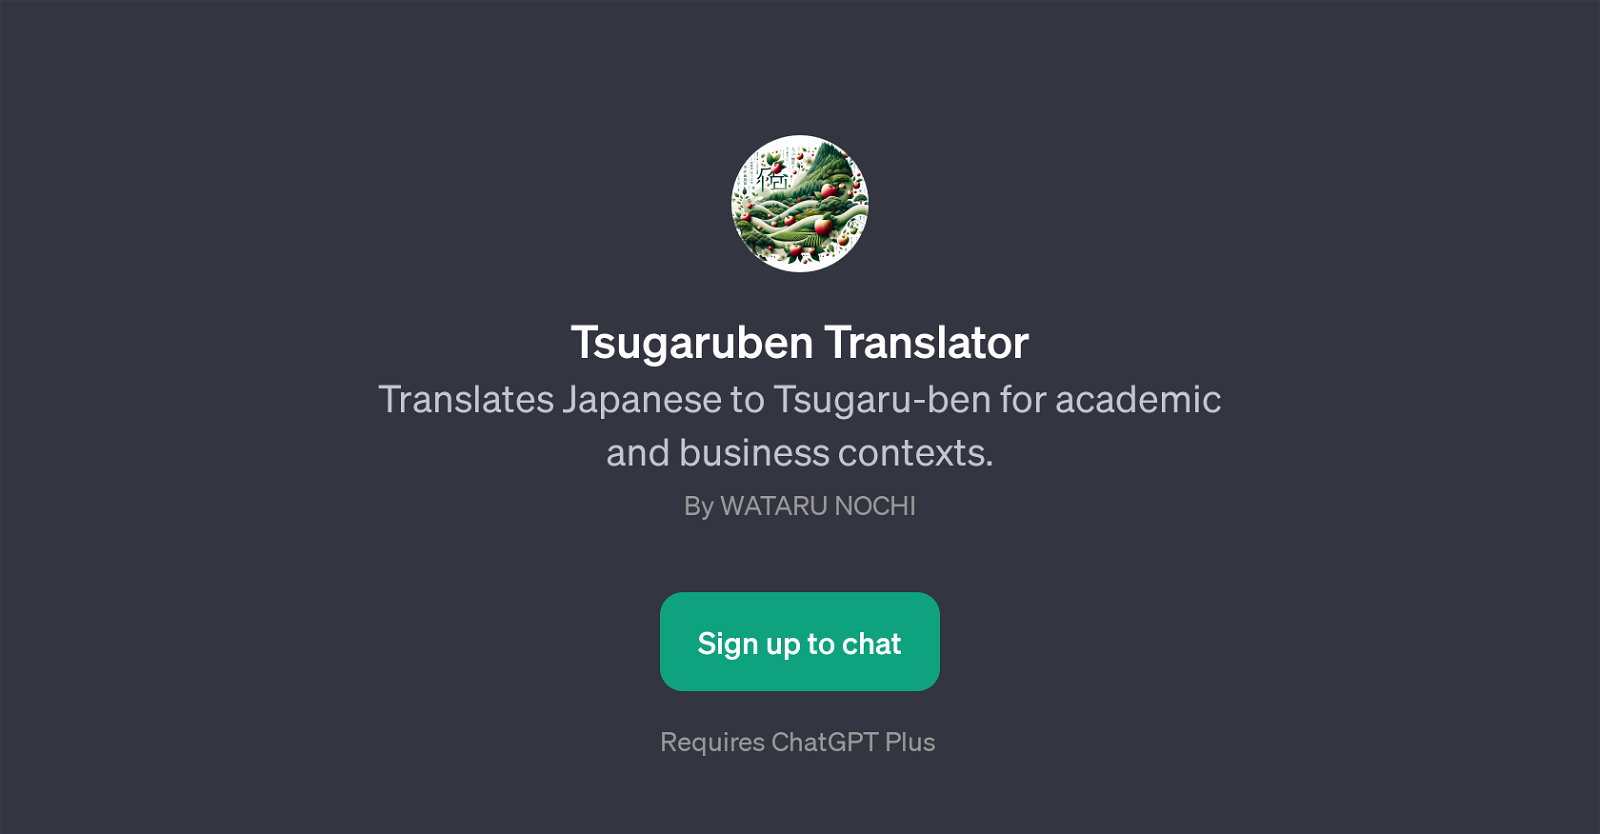 Tsugaruben Translator website